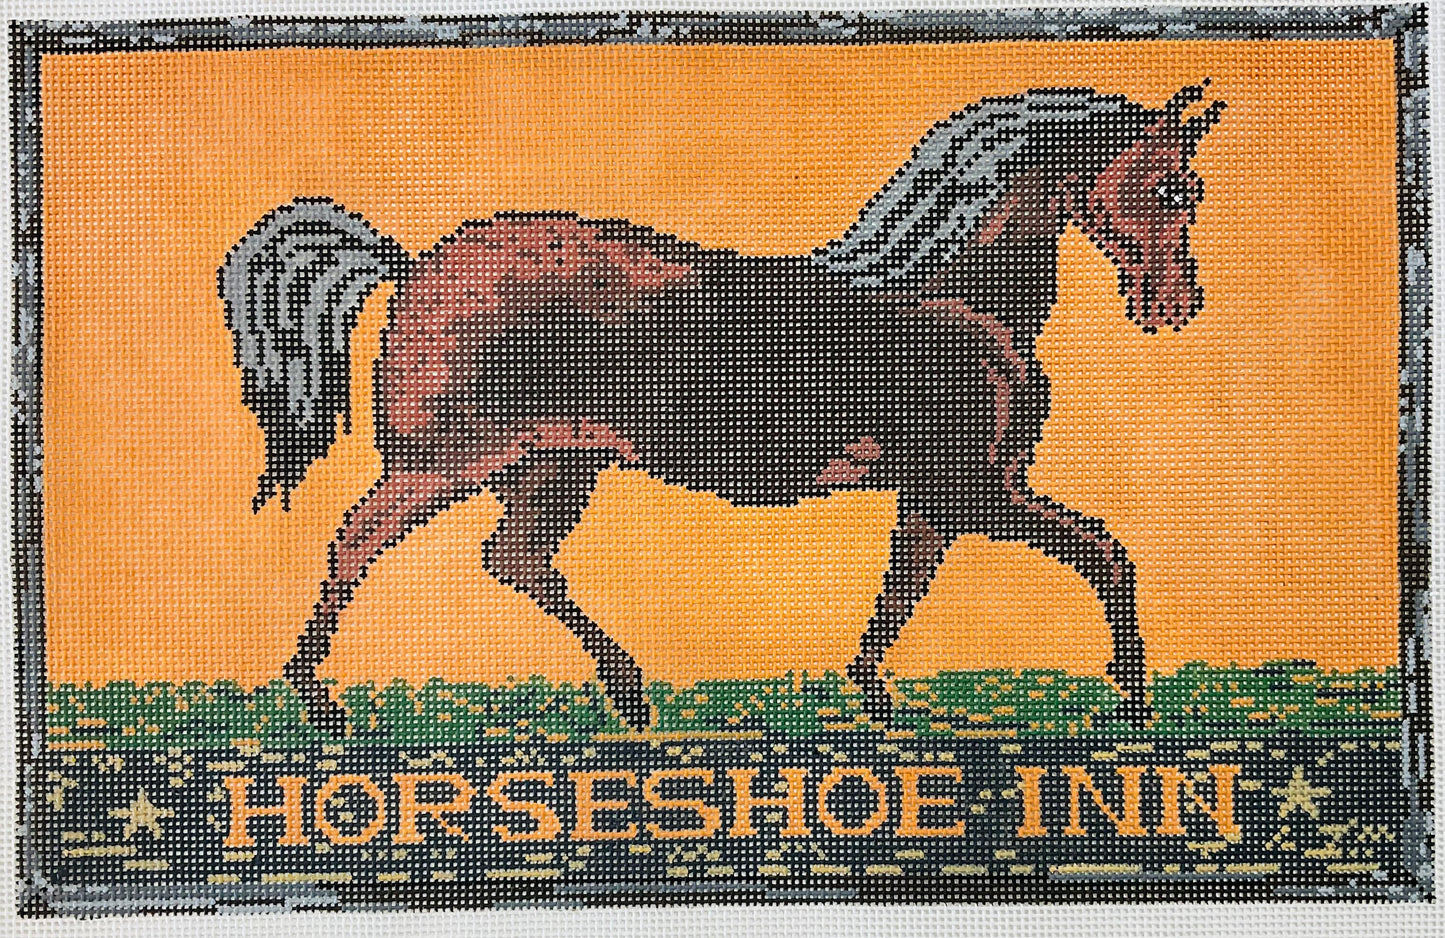 Horseshoe Inn